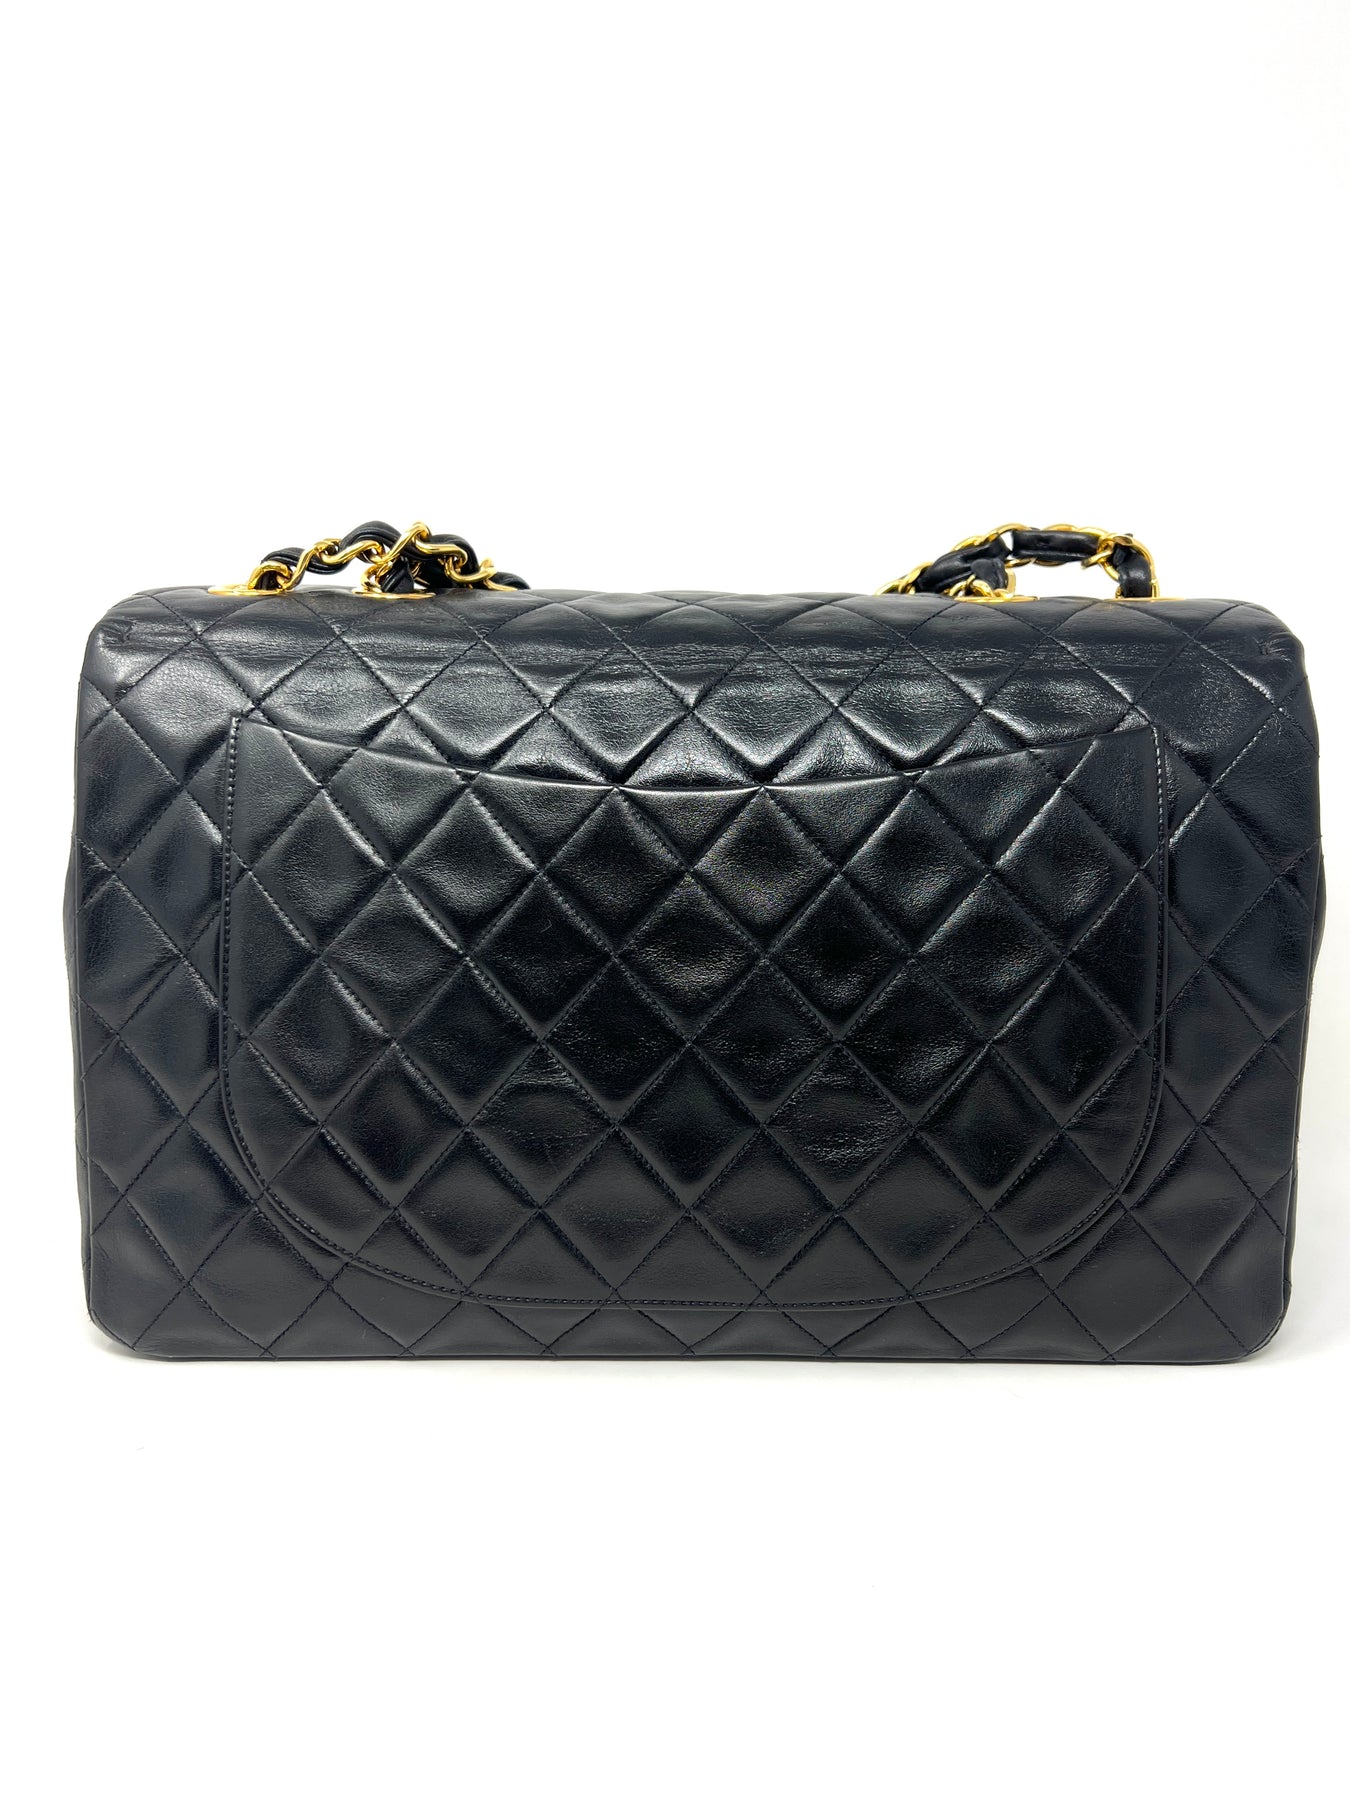 HERMÈS Birkin 35 handbag in Soleil Clemence leather and Canvas